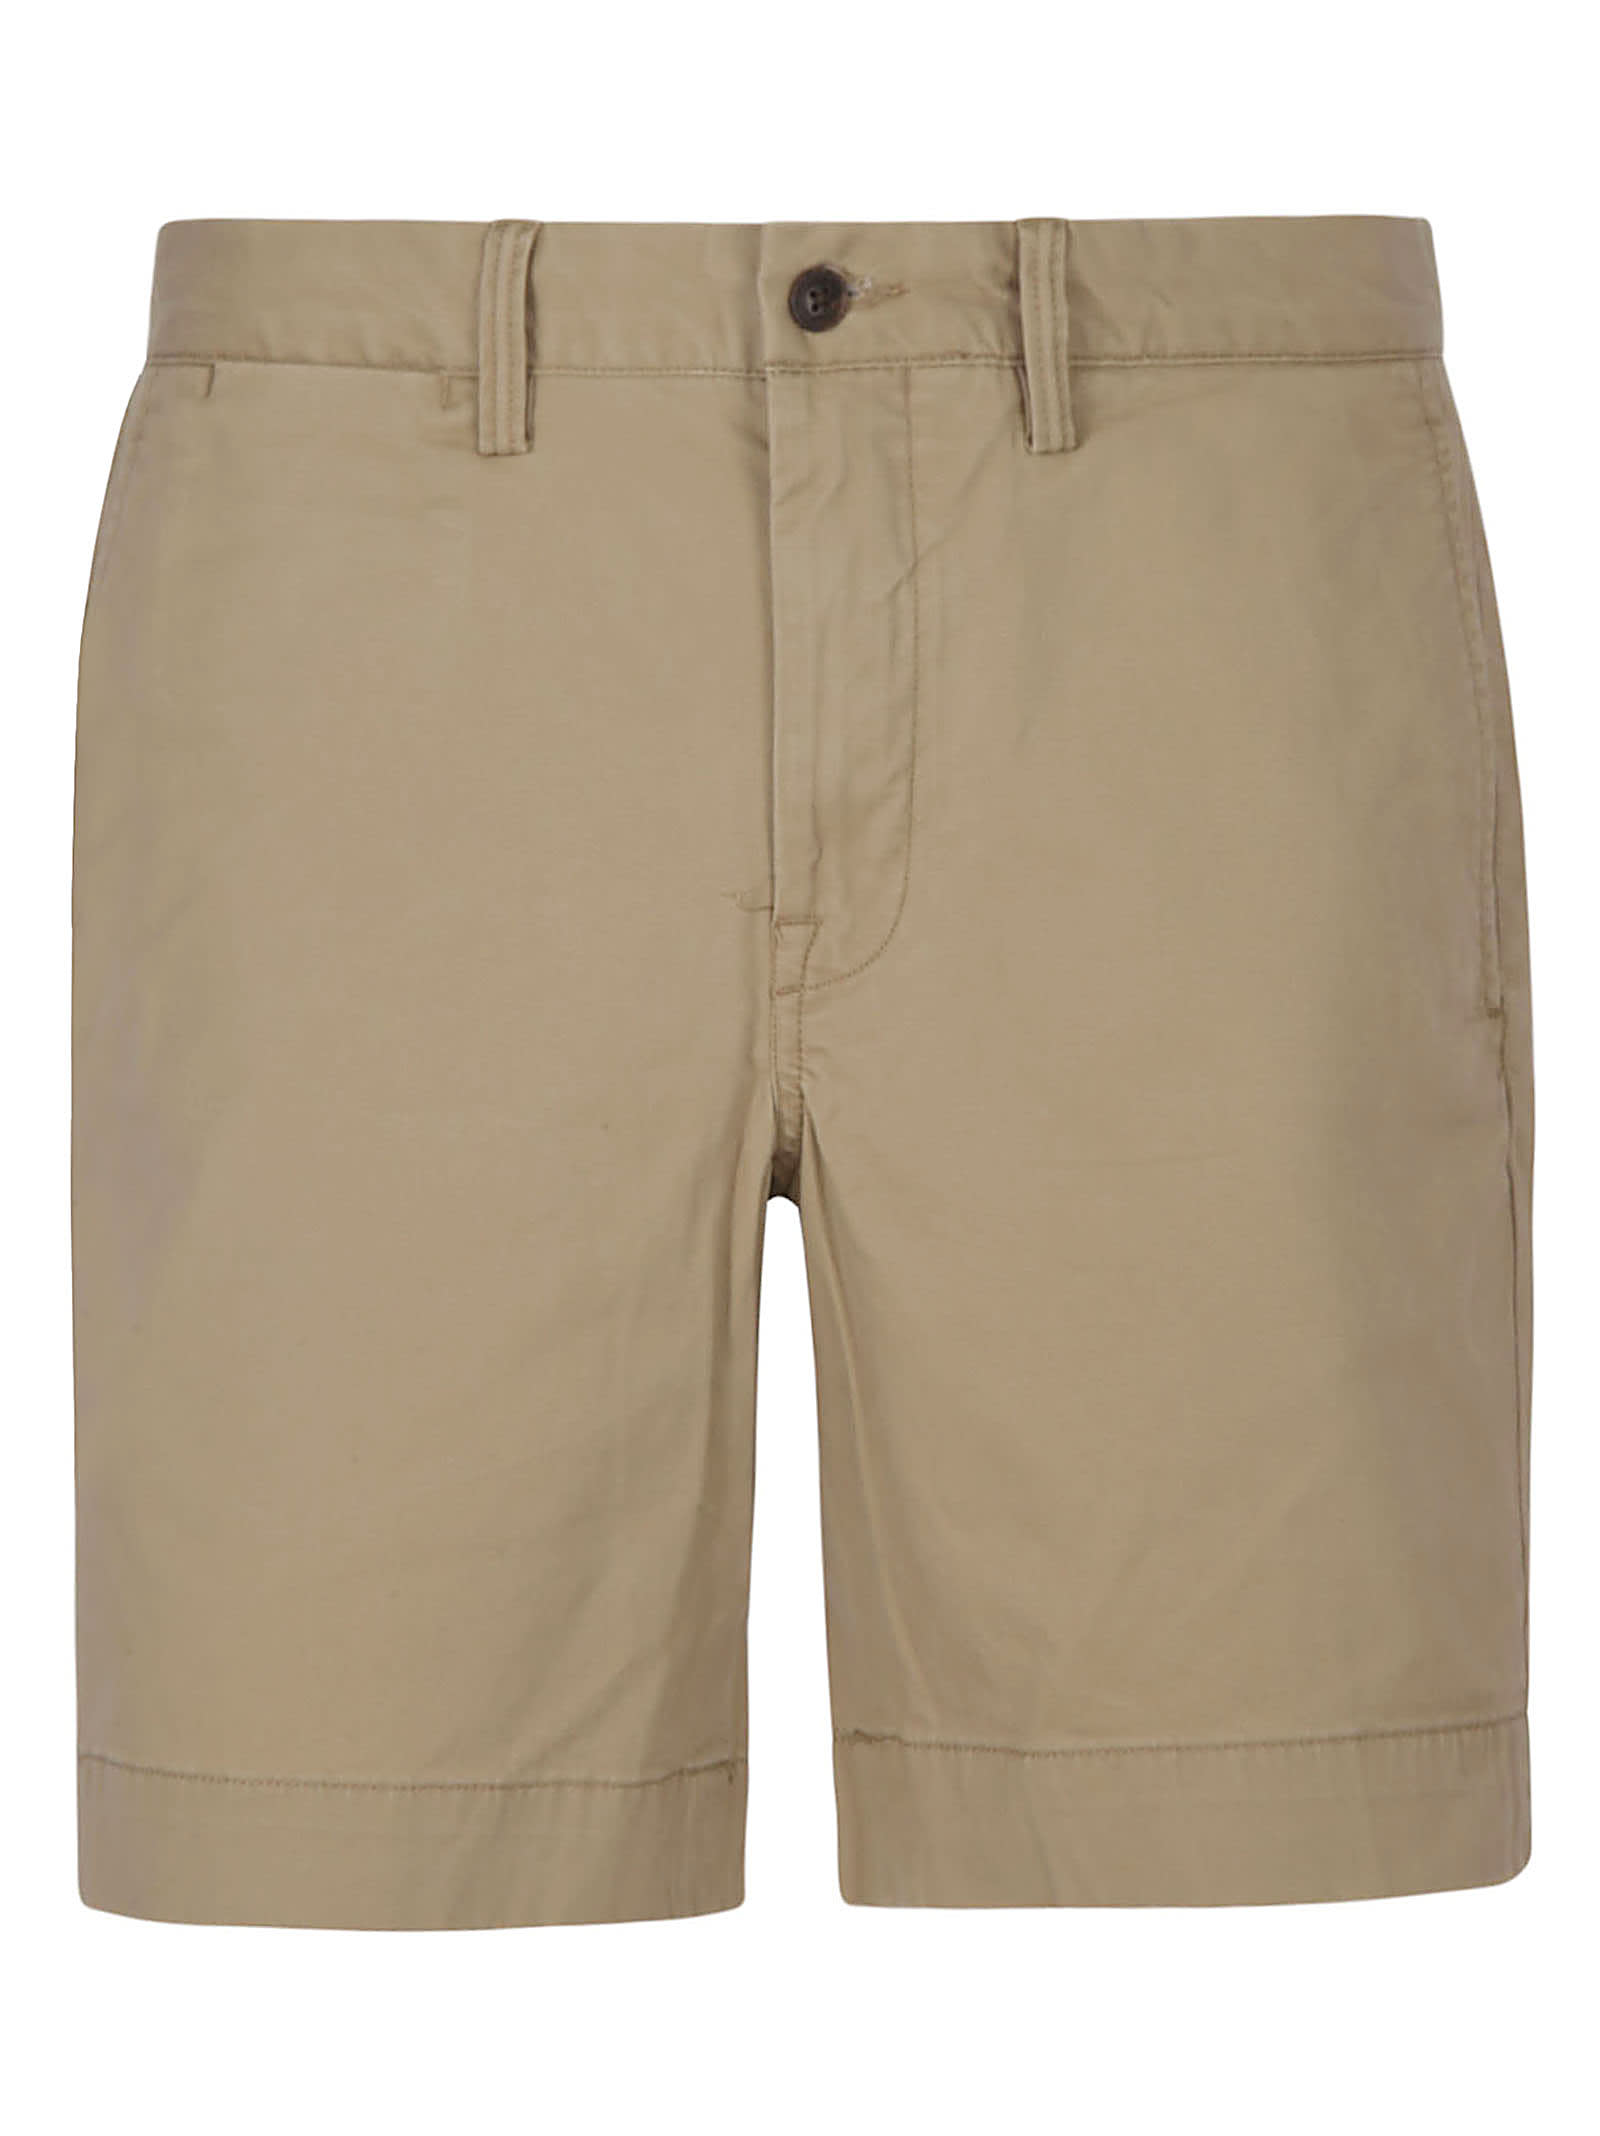 Ralph Lauren Straight Fit Bedford Flat Shorts